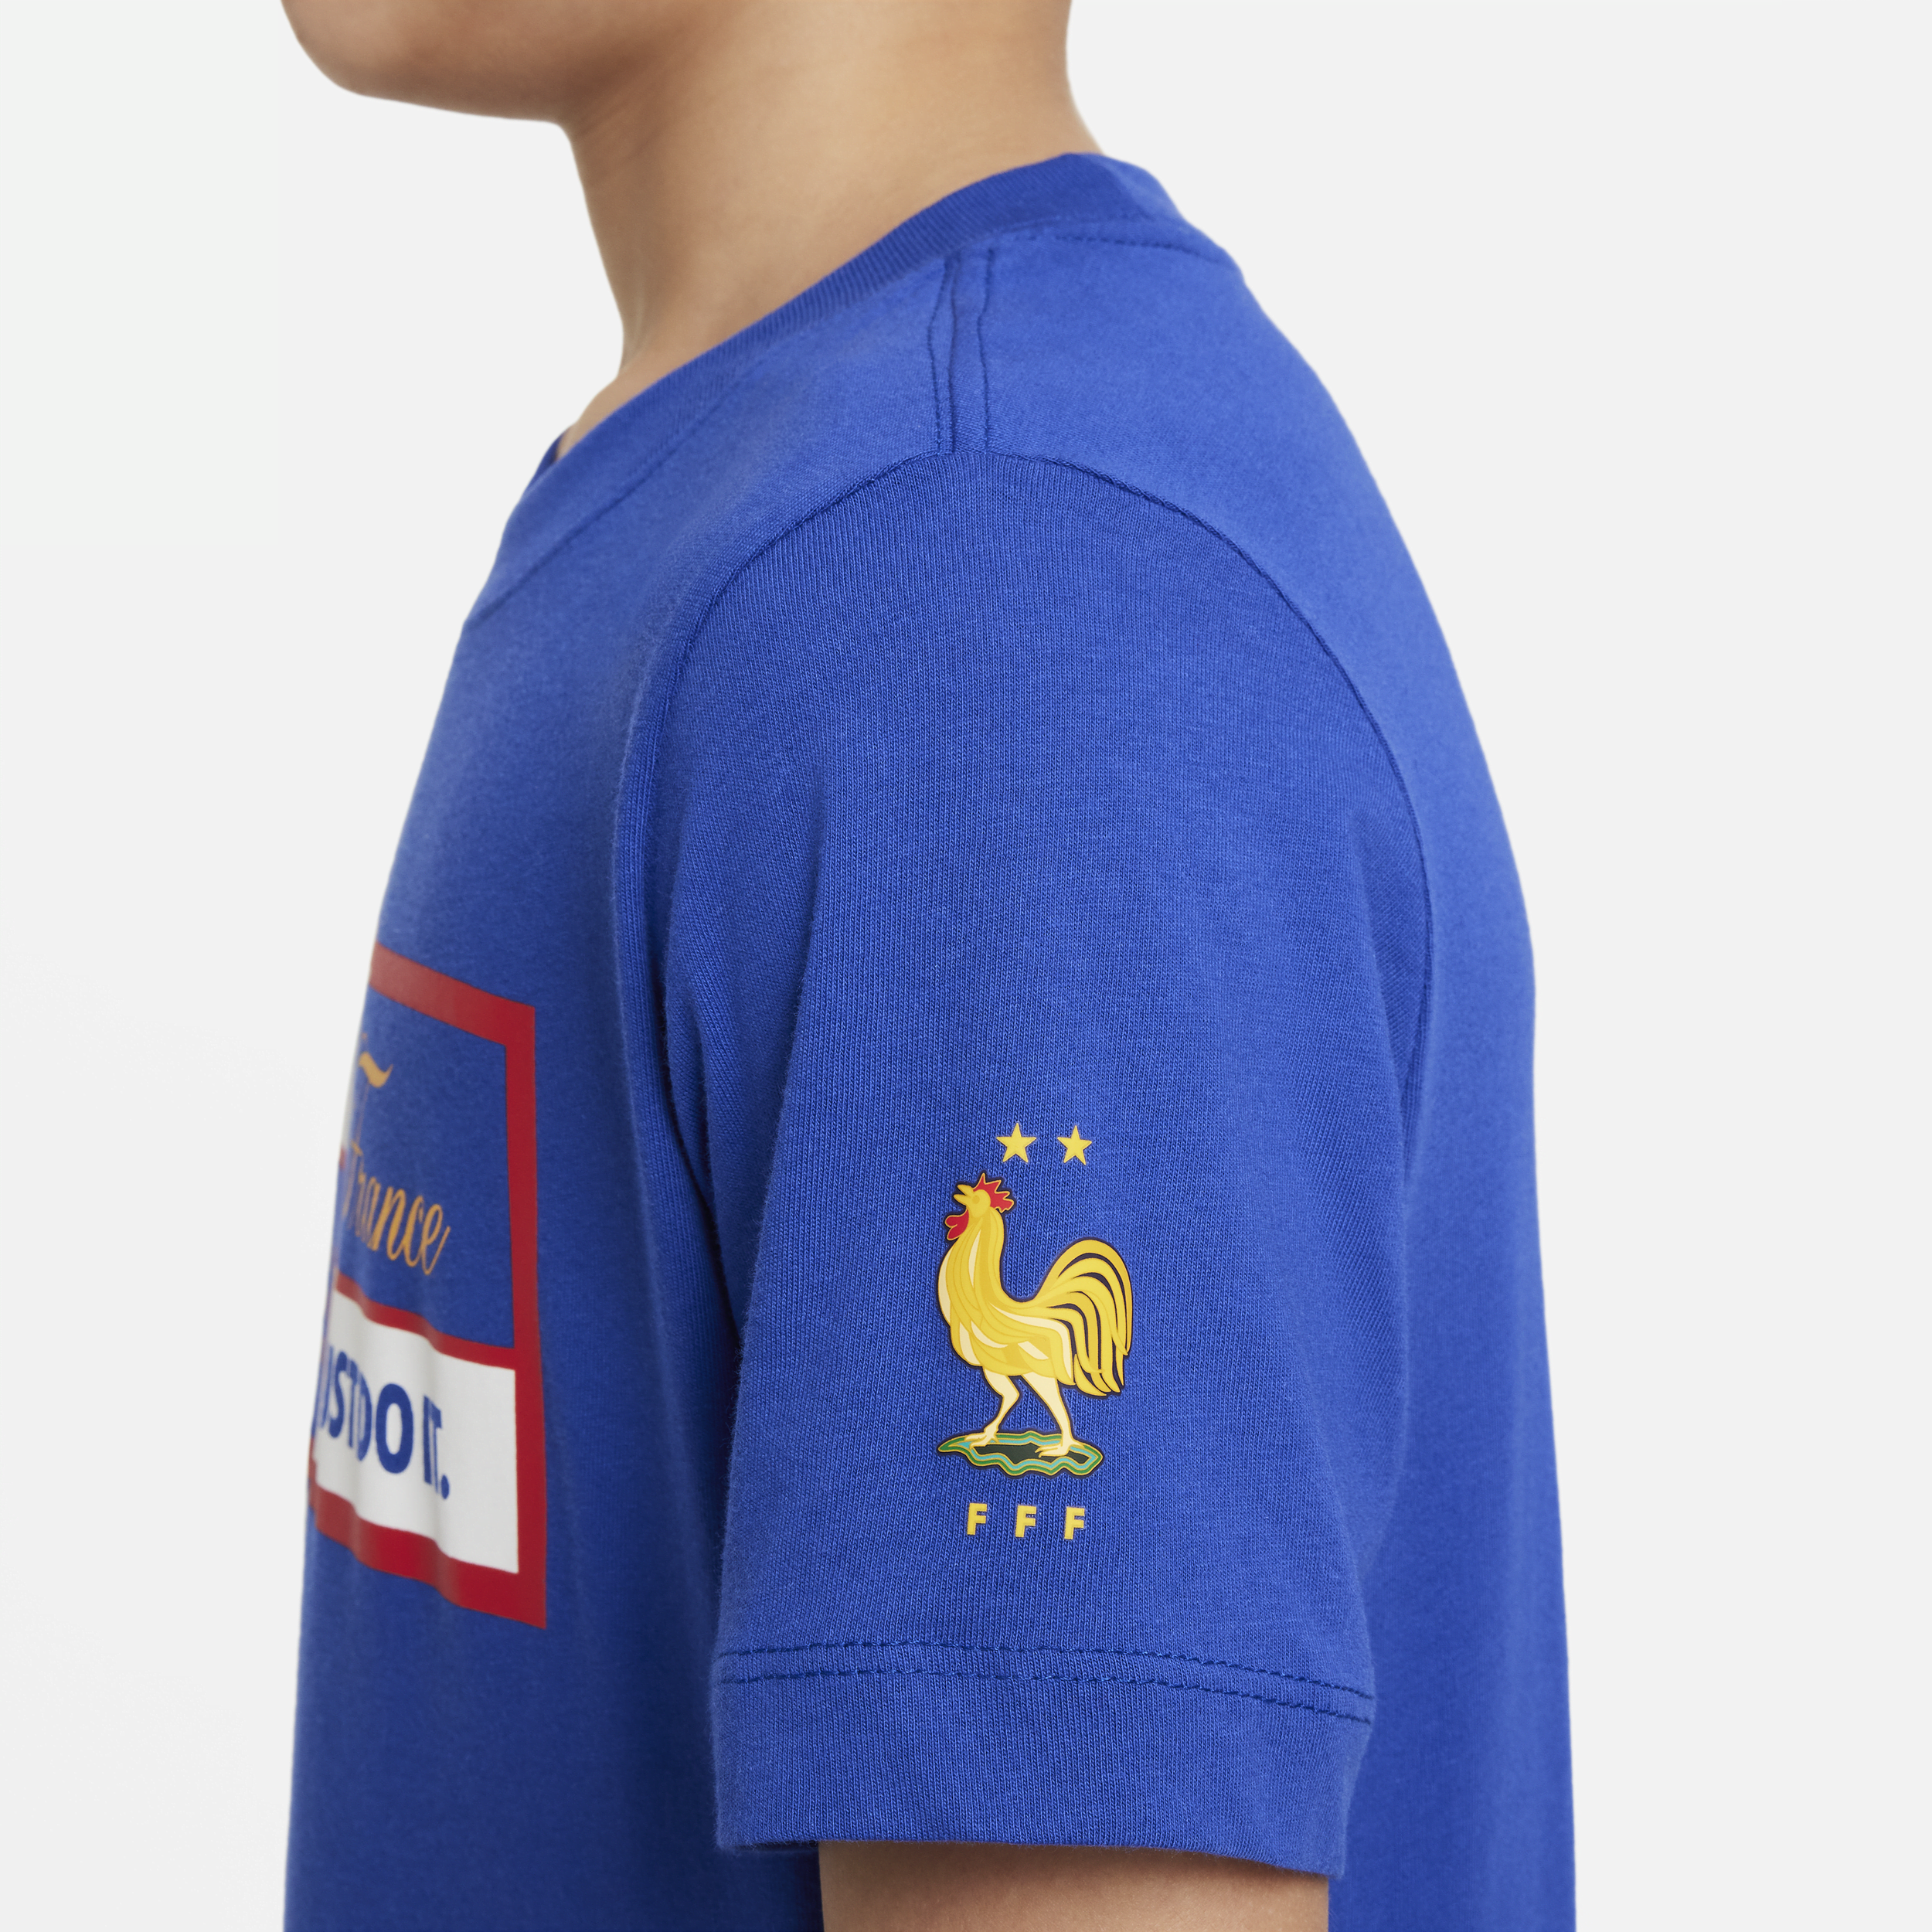 Nike FFF voetbalshirt voor kids Blauw